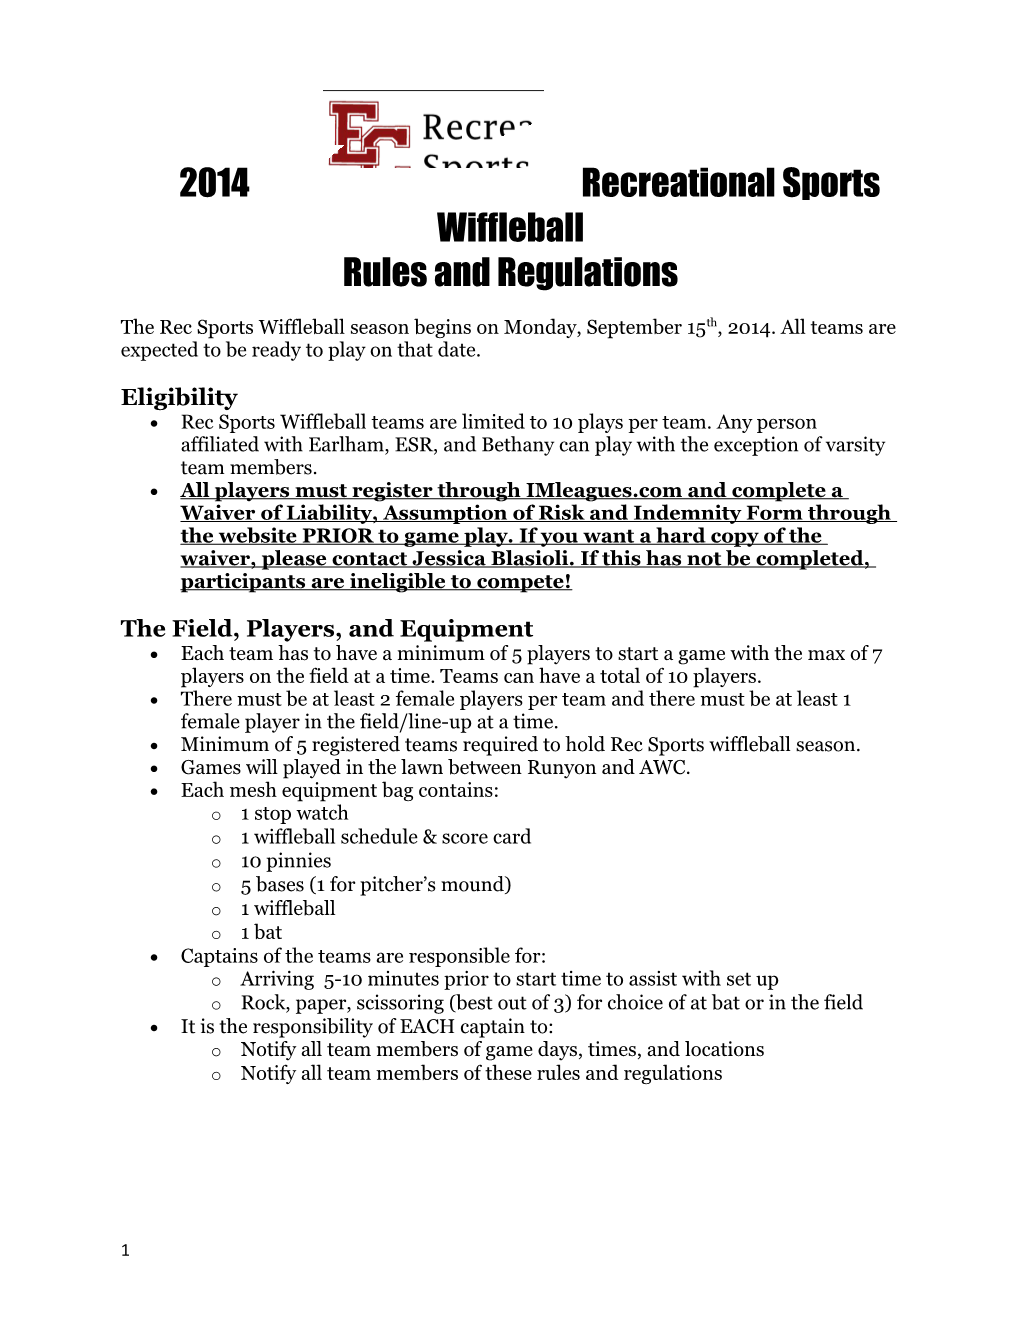 2014 Recreational Sports Wiffleball